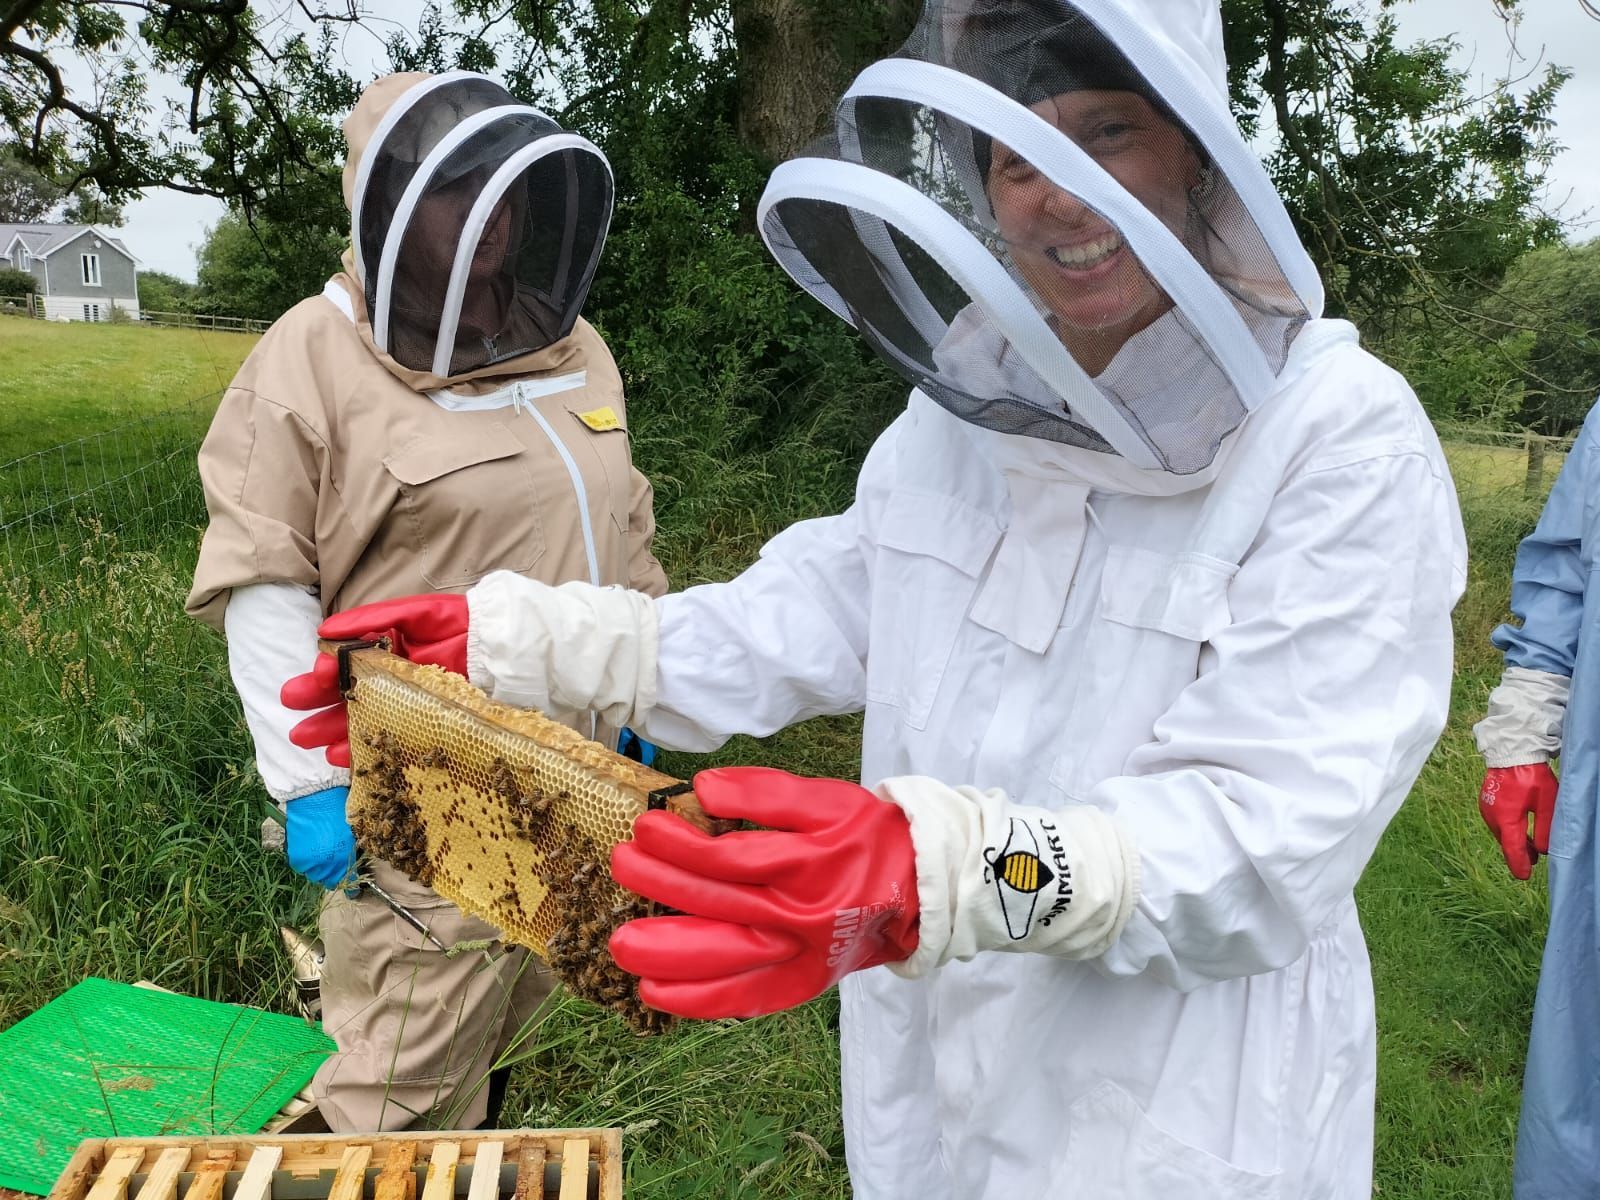 Beekeeping experiences are fun!